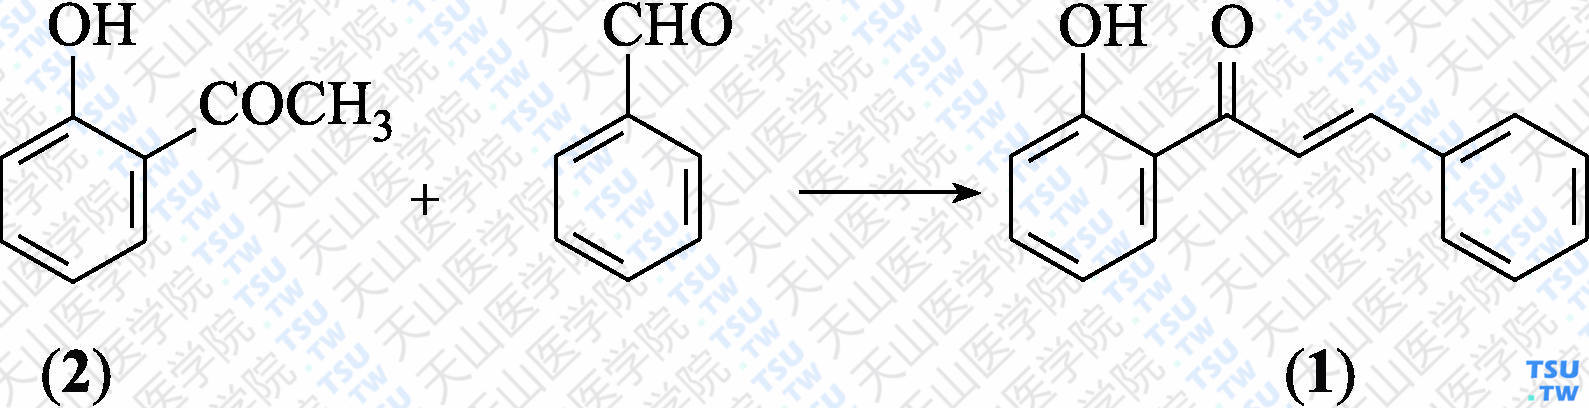 2'-羟基查尔酮（分子式：C<sub>15</sub>H<sub>12</sub>O<sub>2</sub>）的合成方法路线及其结构式